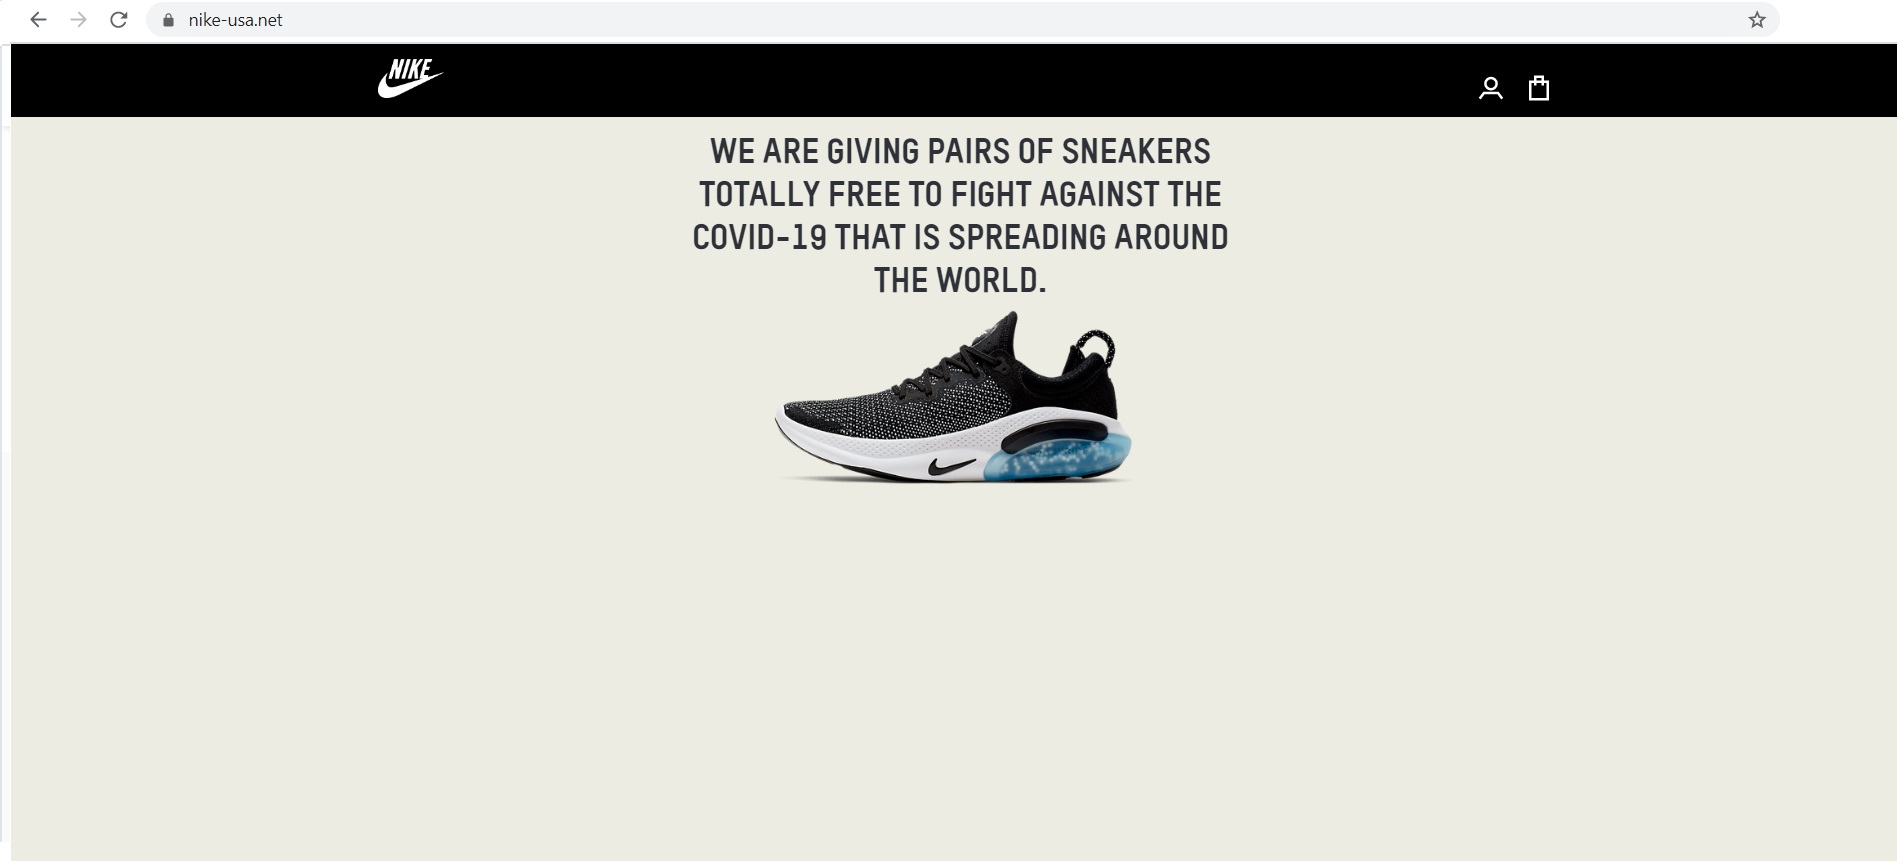 usa net free sneakers